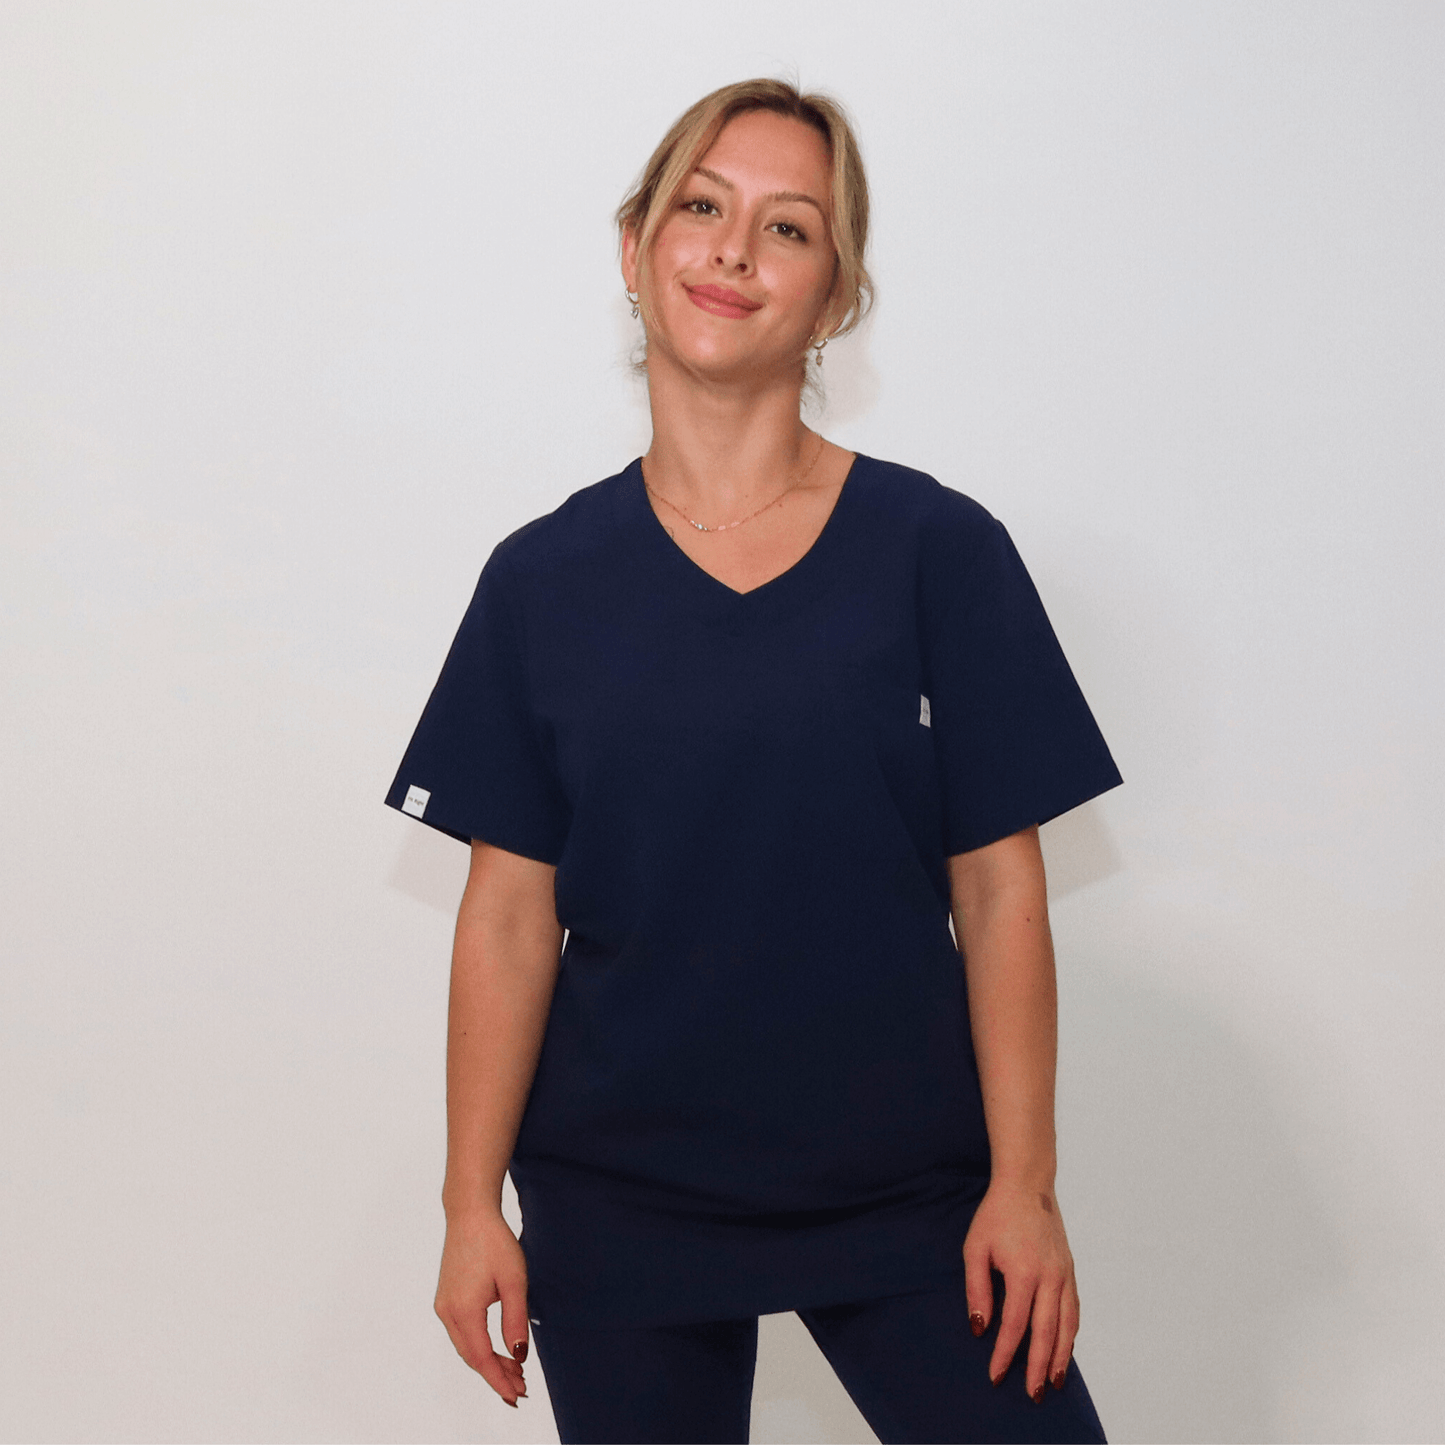 Women's Essential Navy Medical Scrub Top